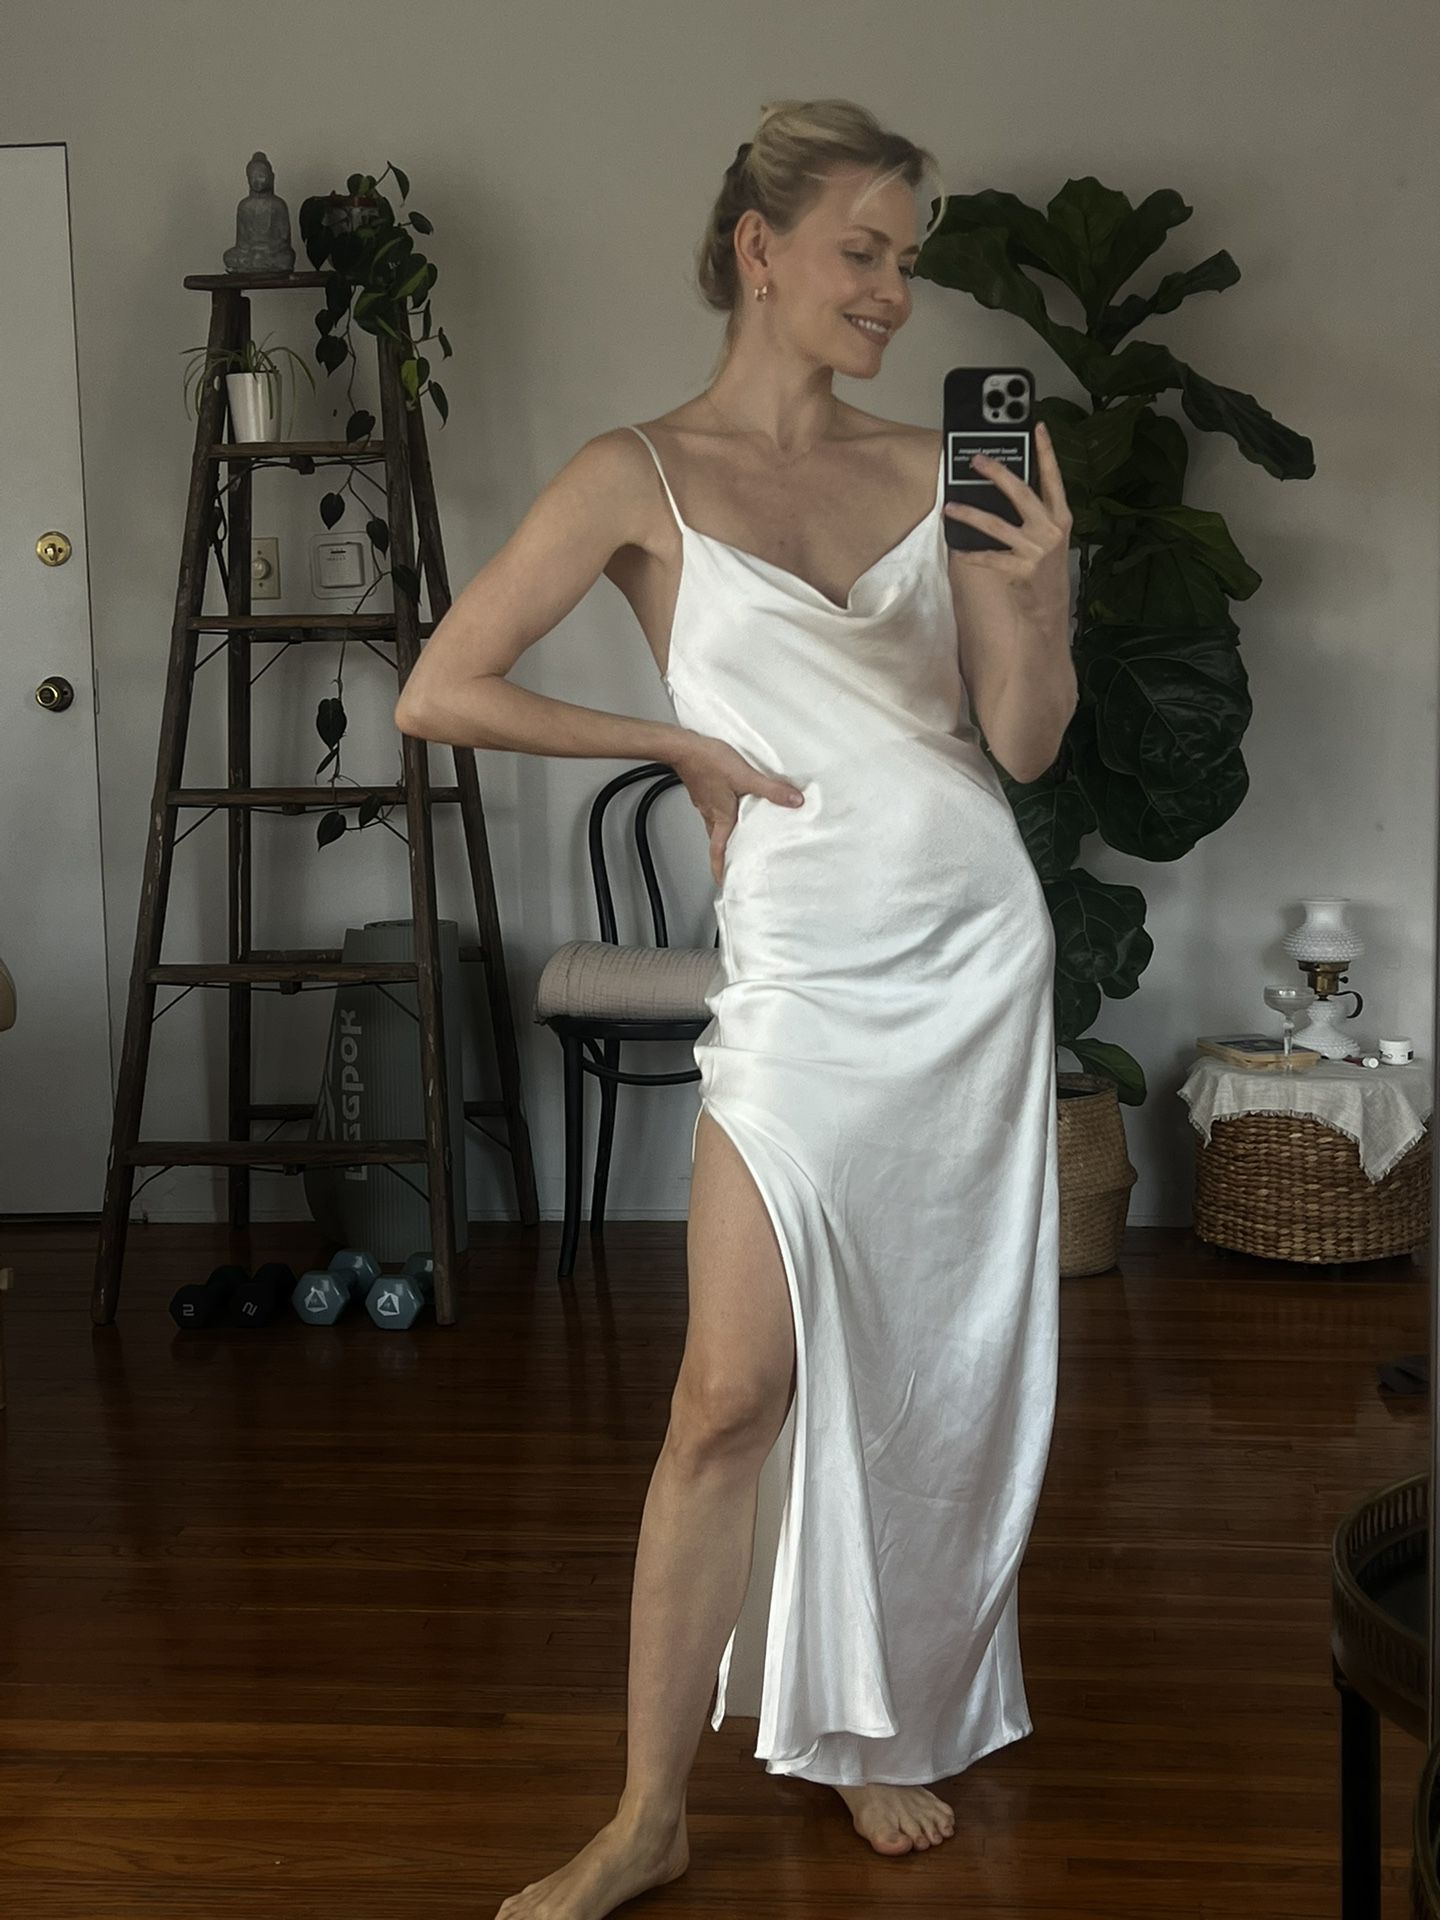 Wedding White Dress Size S 